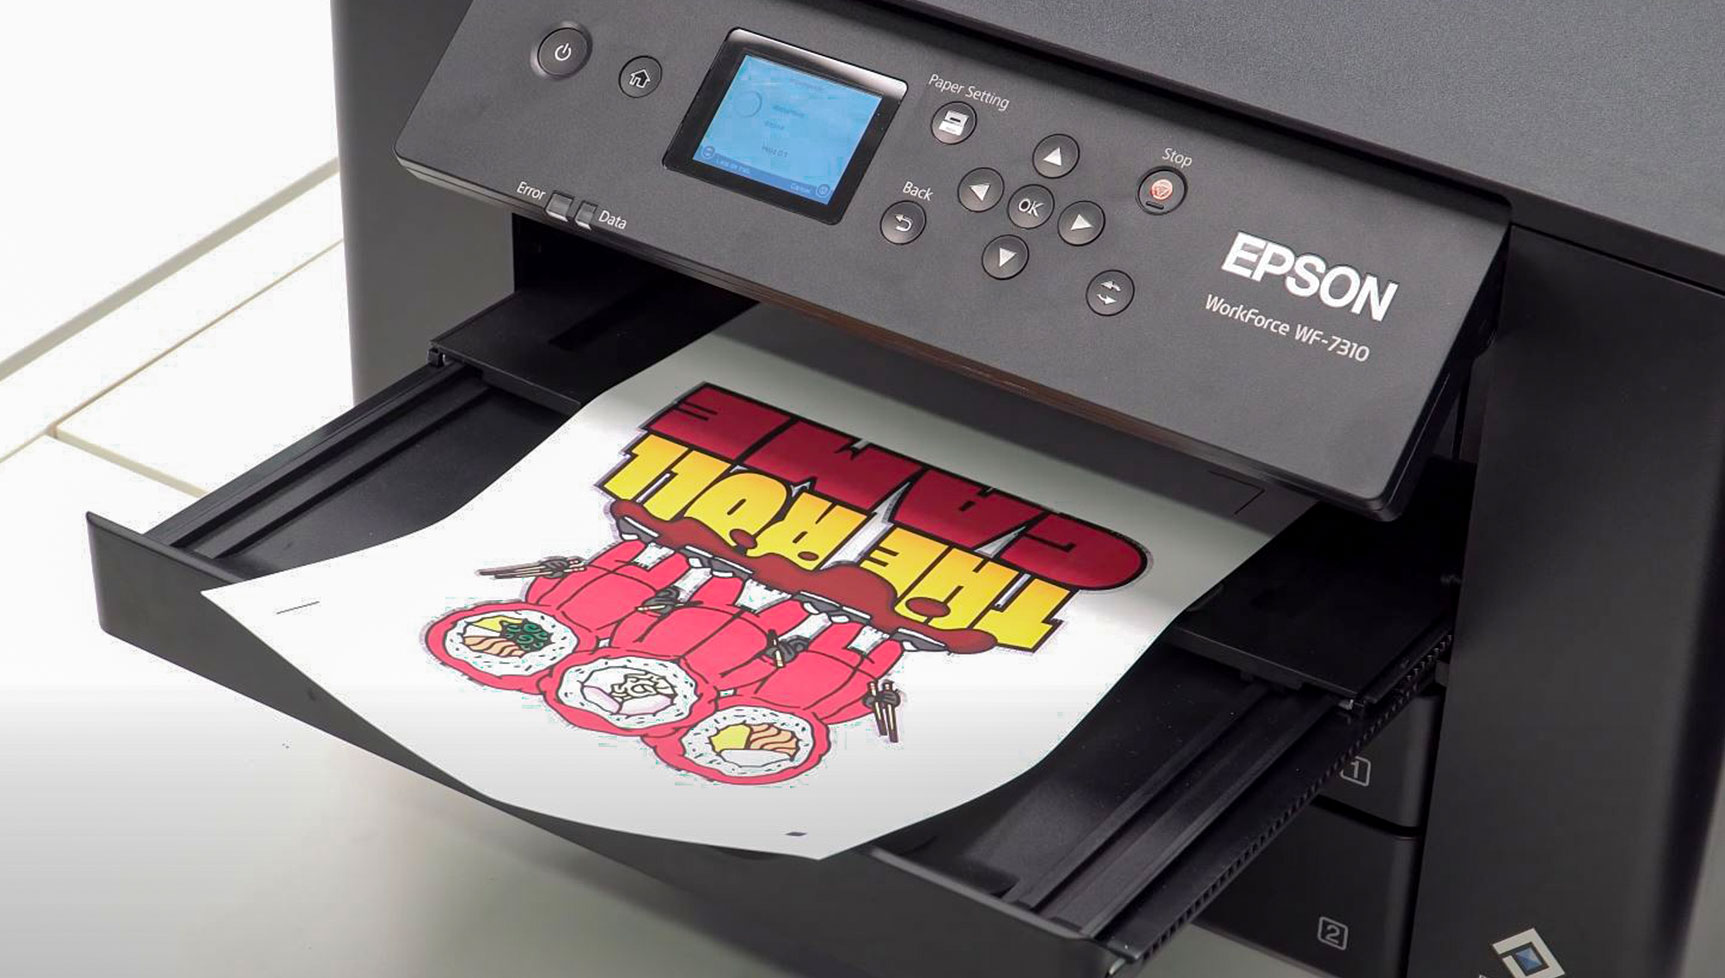 Papel transfer textil: Personaliza fácil con tu impresora doméstica inkjet